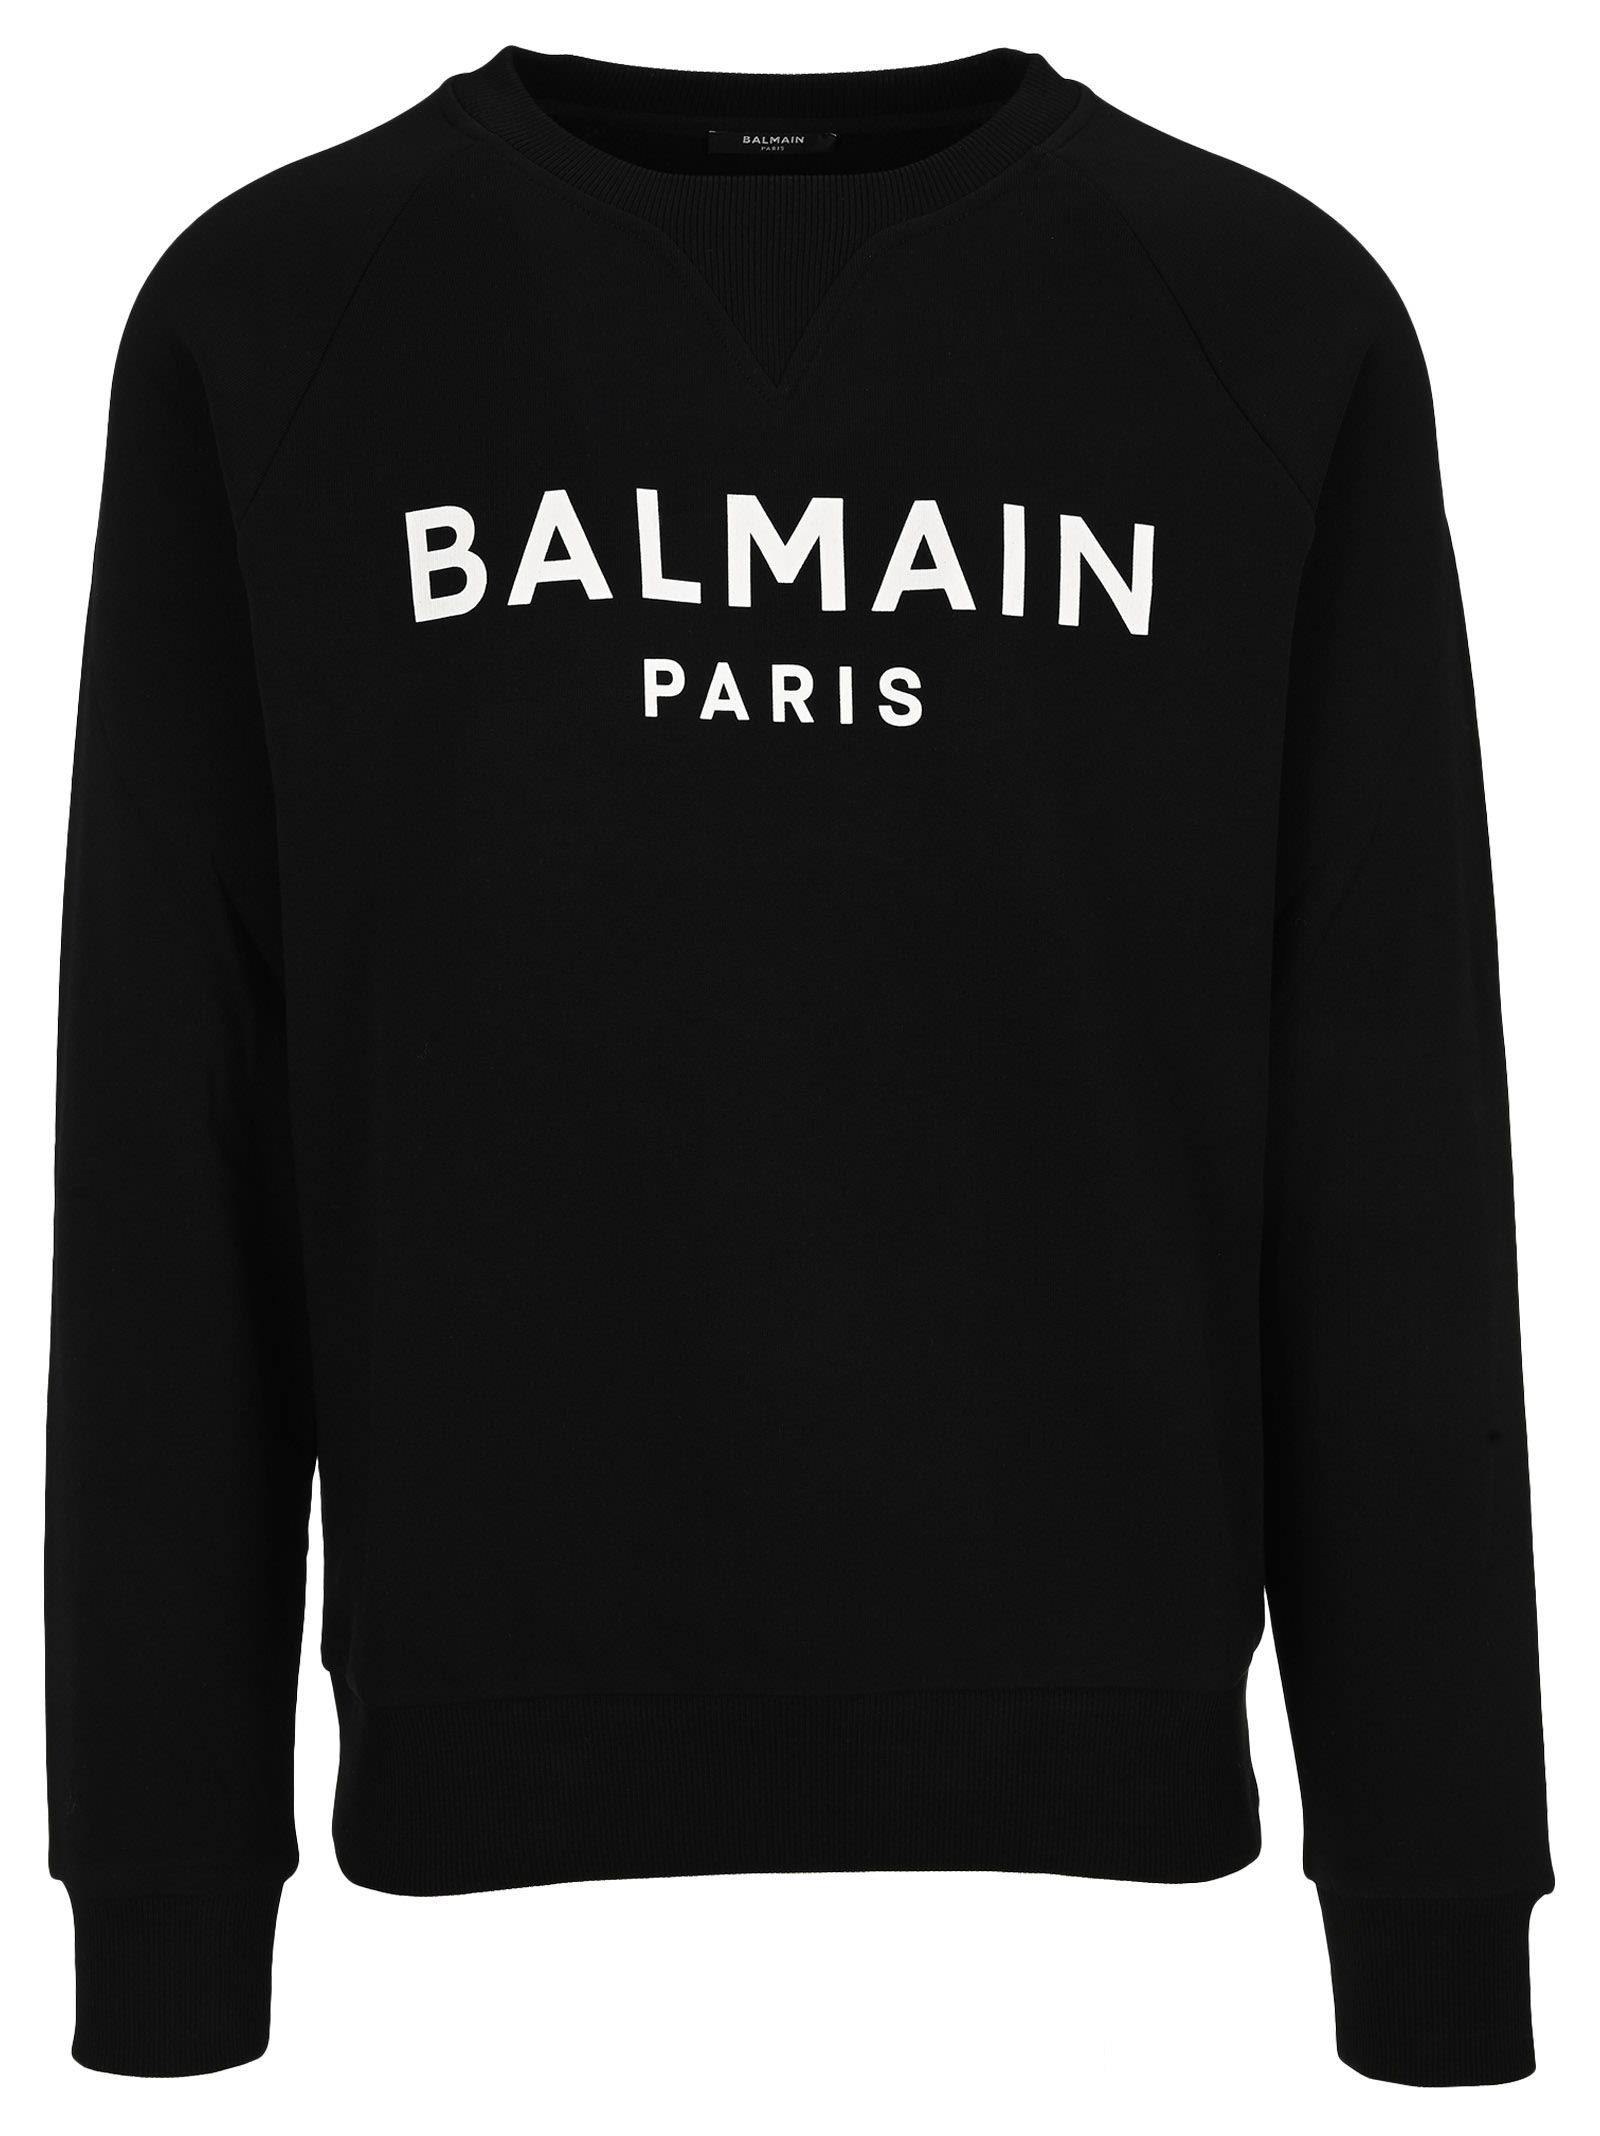 Balmain Black Cotton Sweatshirt With White Balmain Paris Logo Print